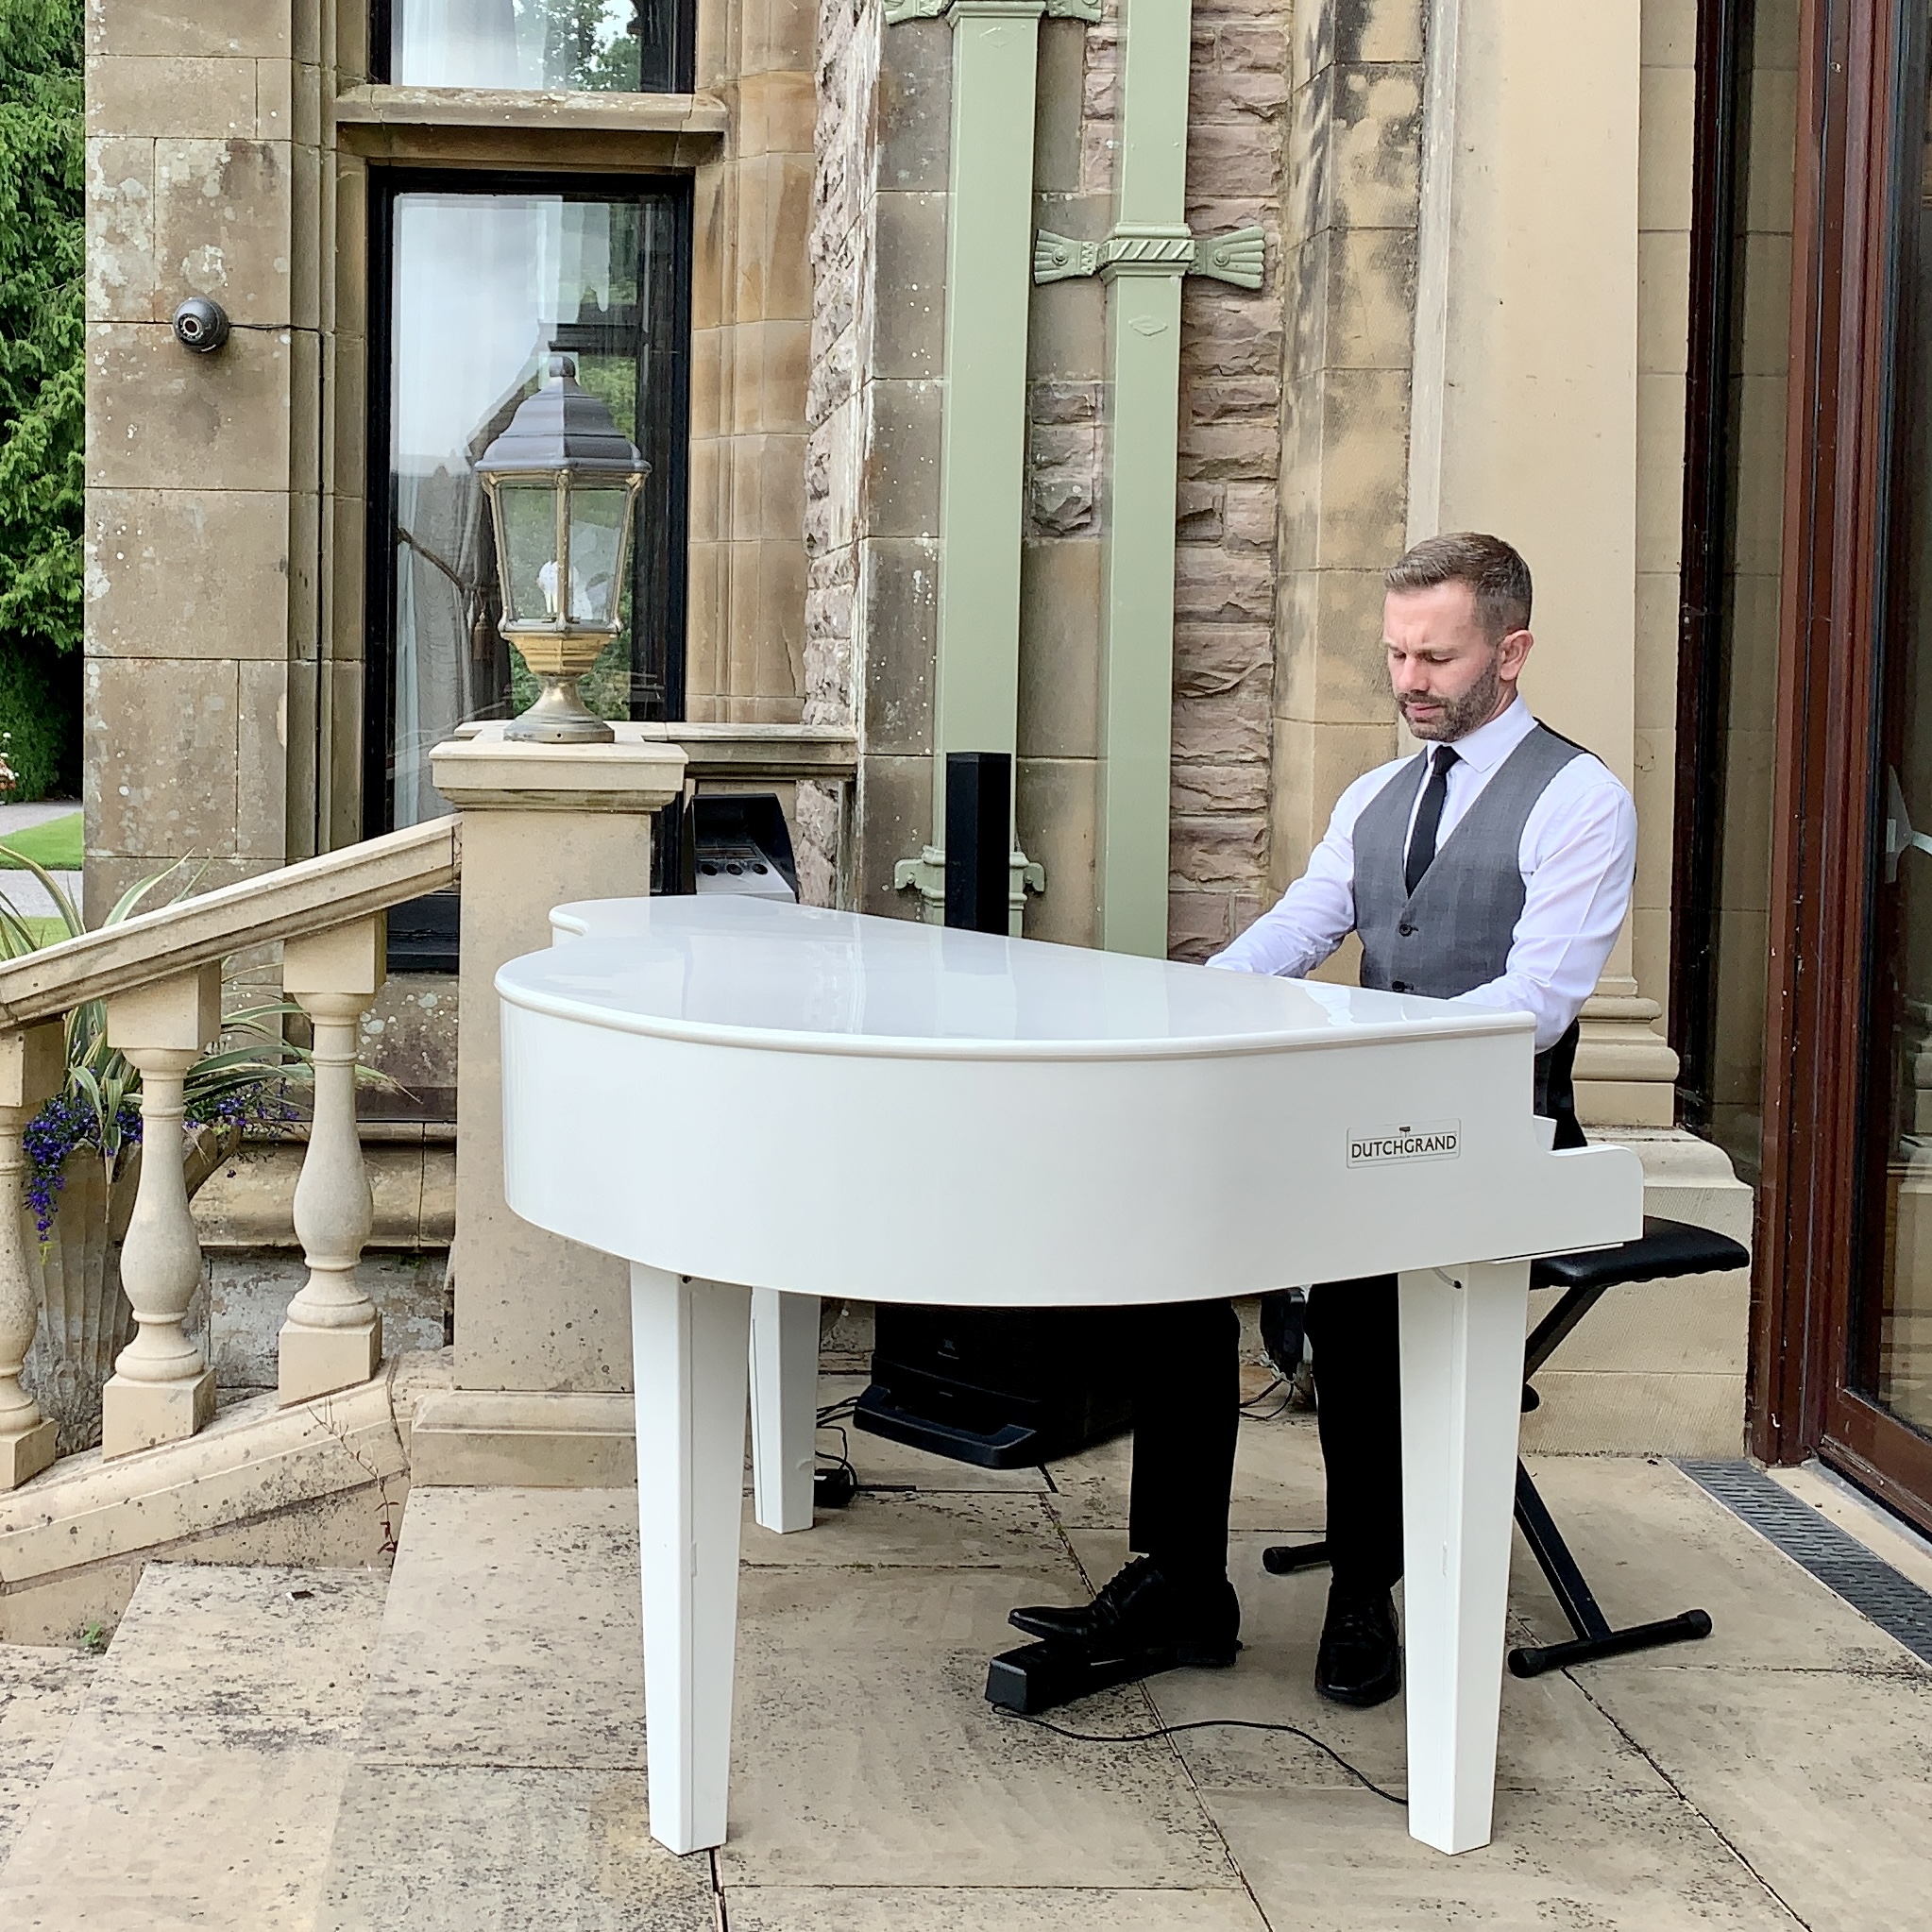 Craig Smith Wedding Pianist for Armathwaite Hall